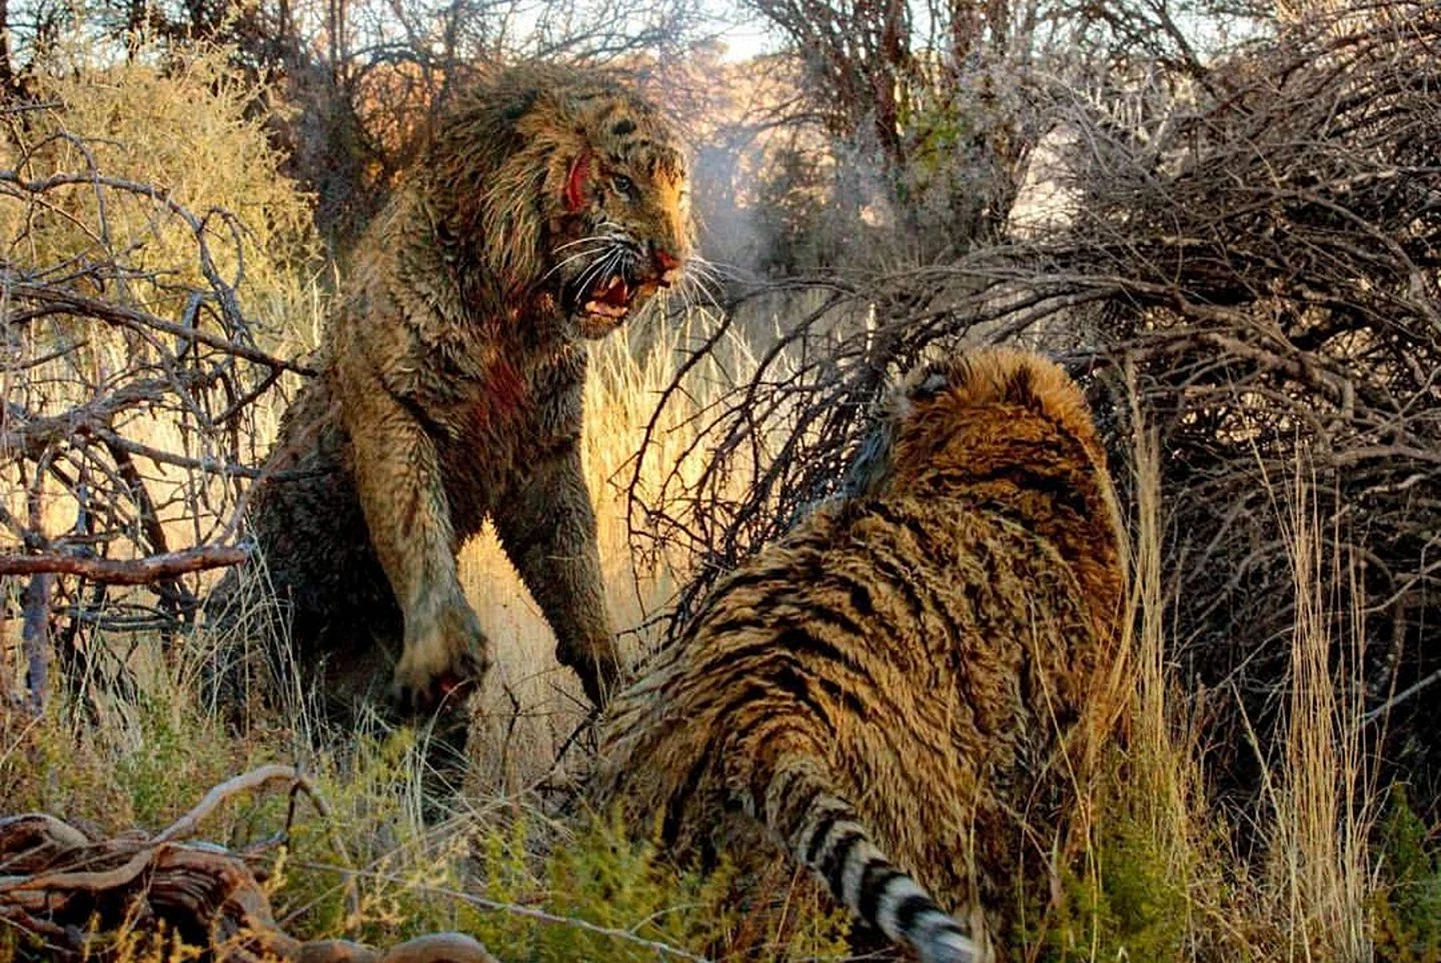 Лев против тигра